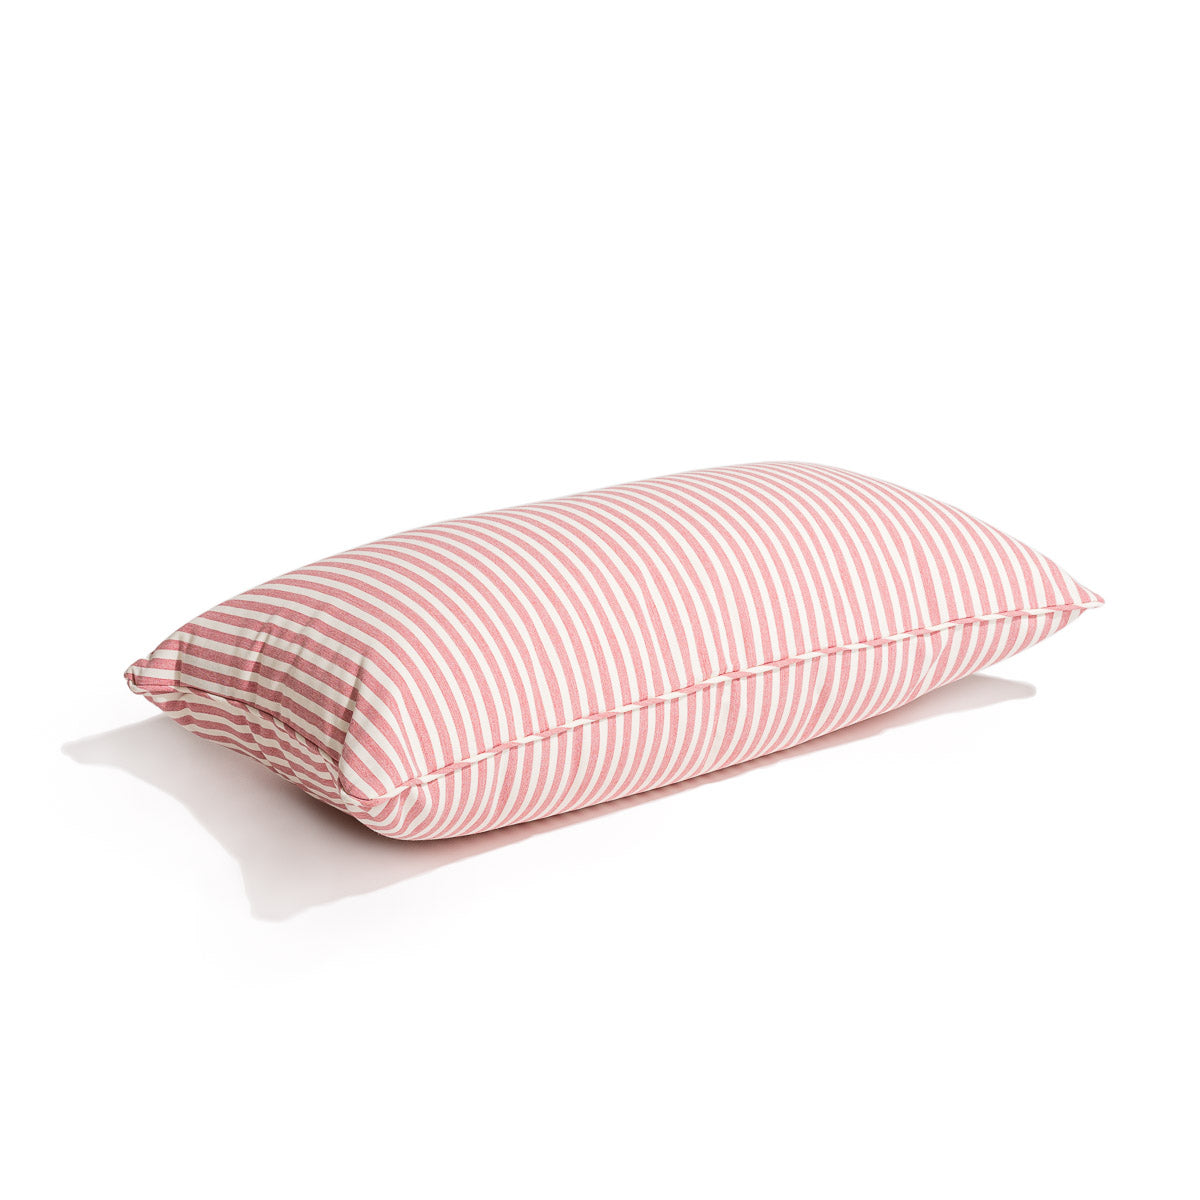 The Rectangle Throw Pillow - Lauren's Pink Stripe